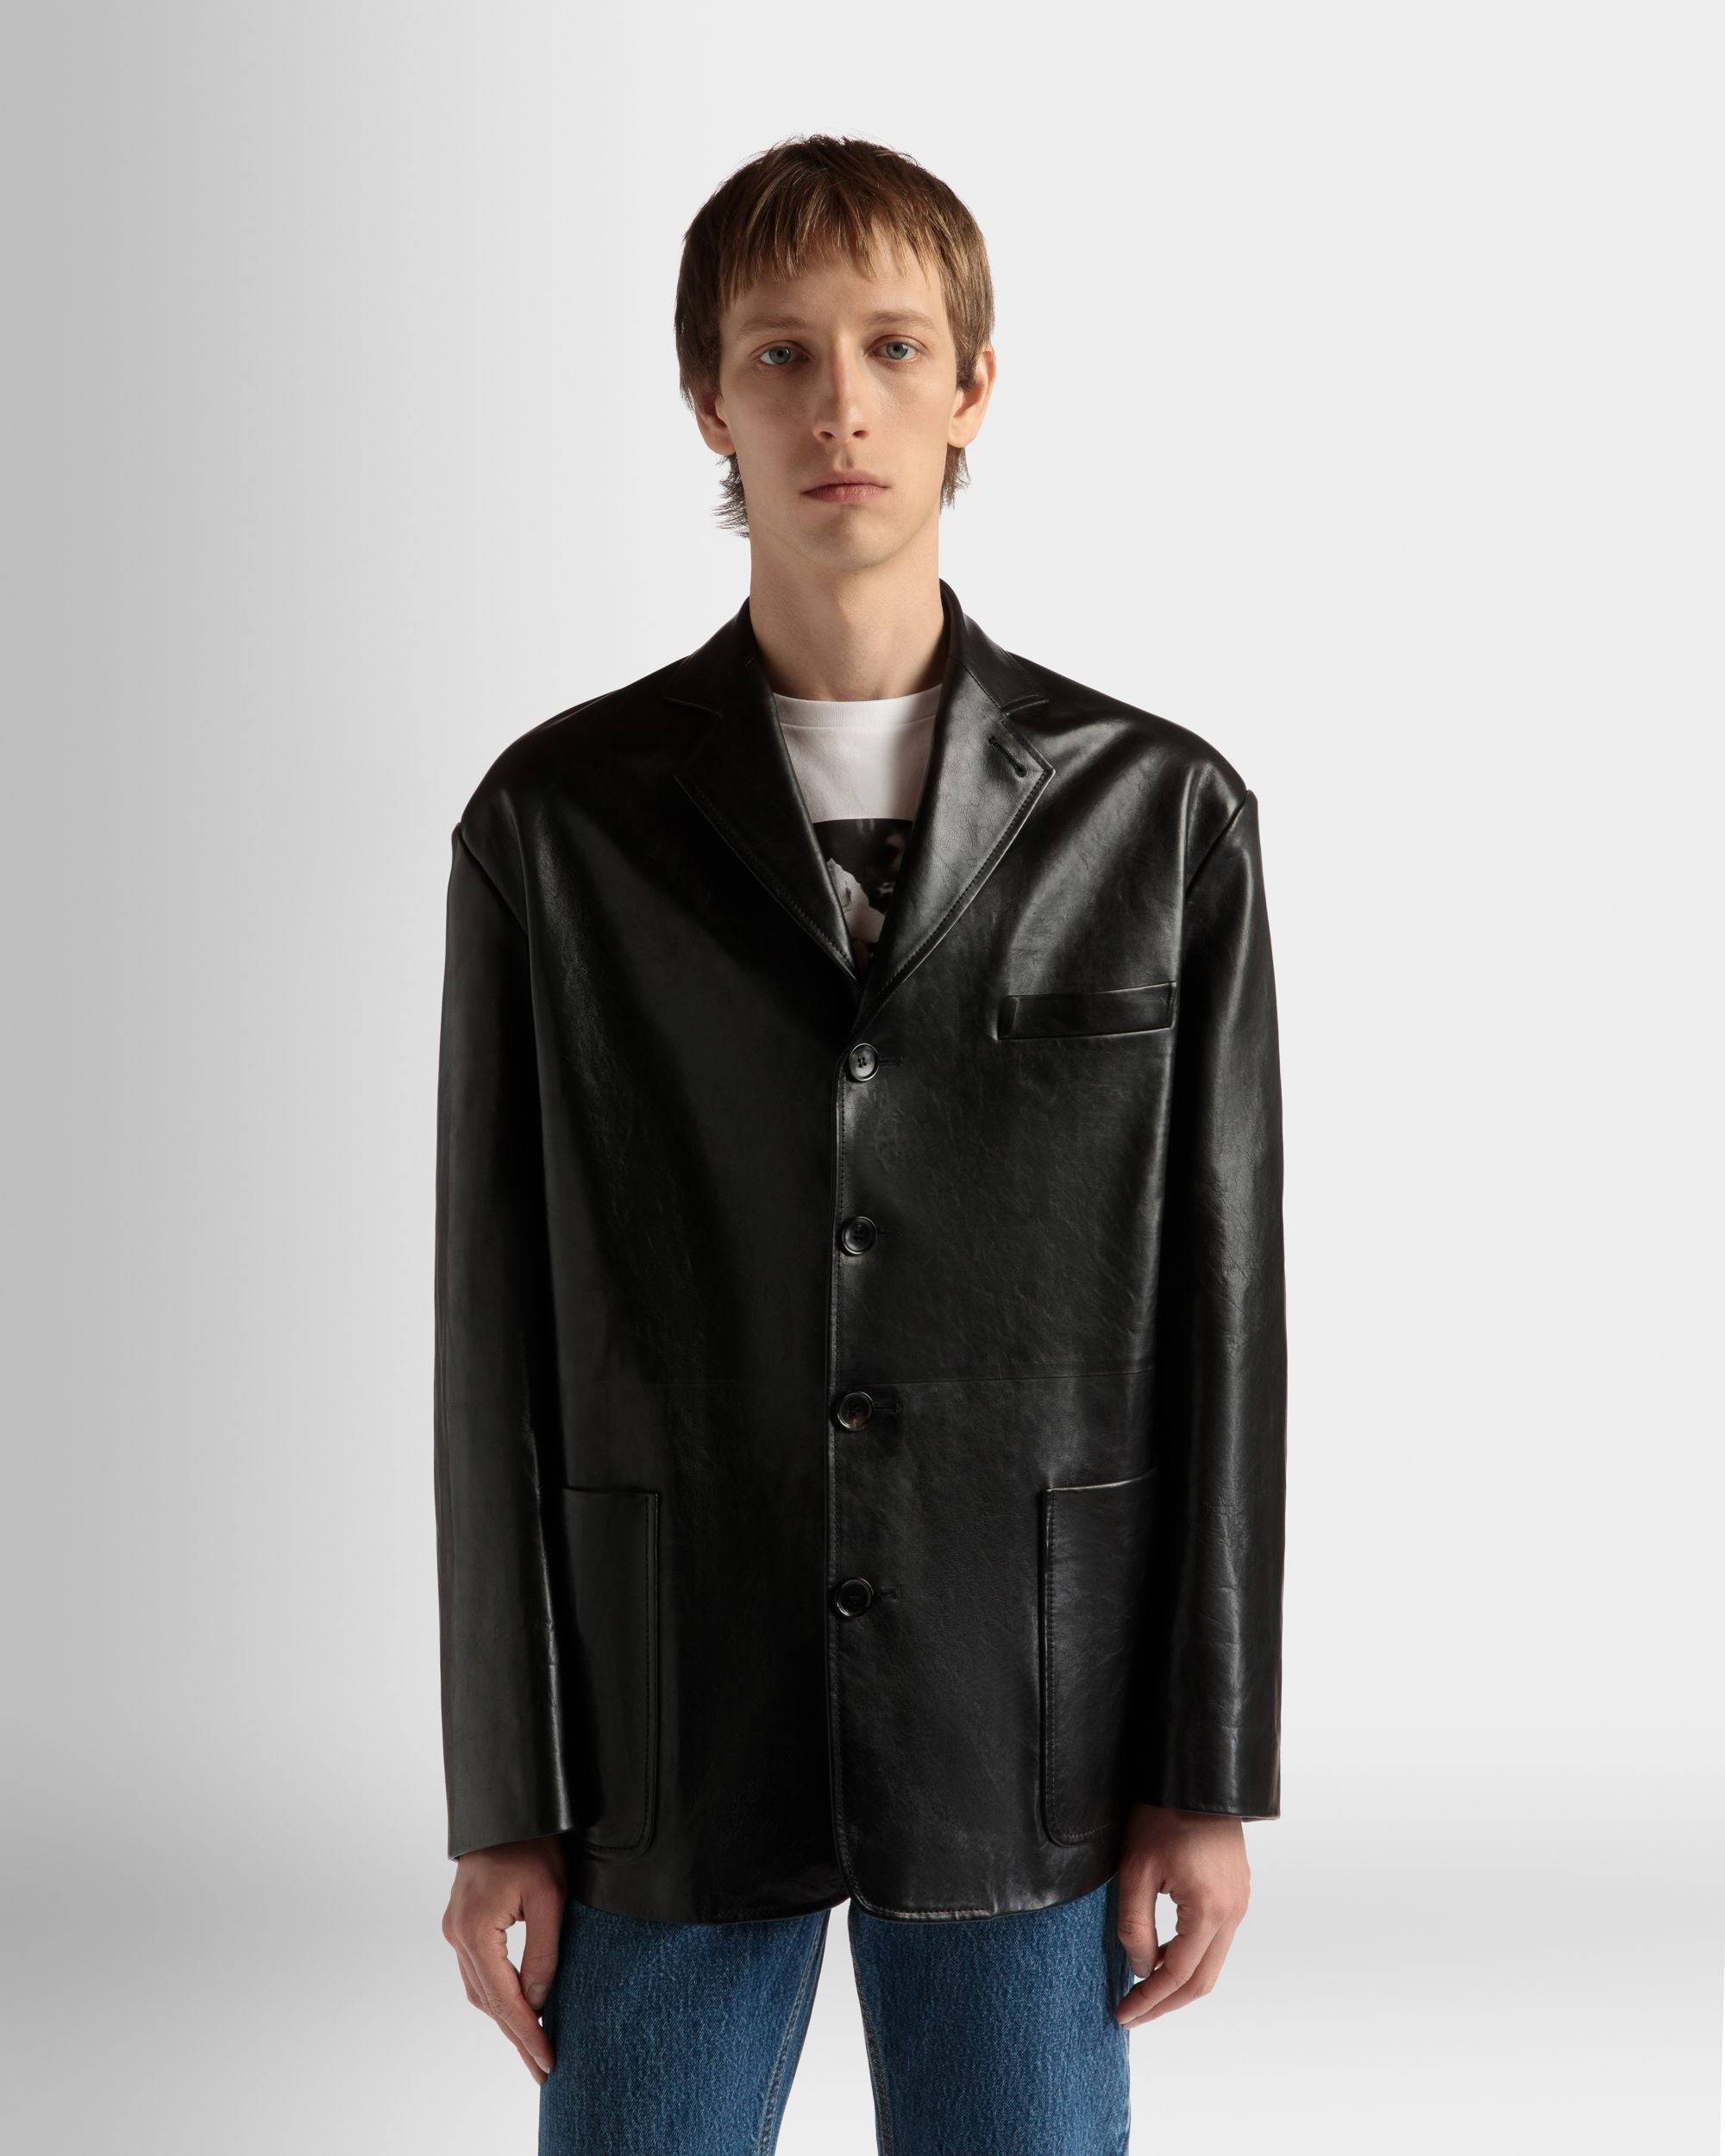 Jacket in Black Leather - Men's - Bally - 03